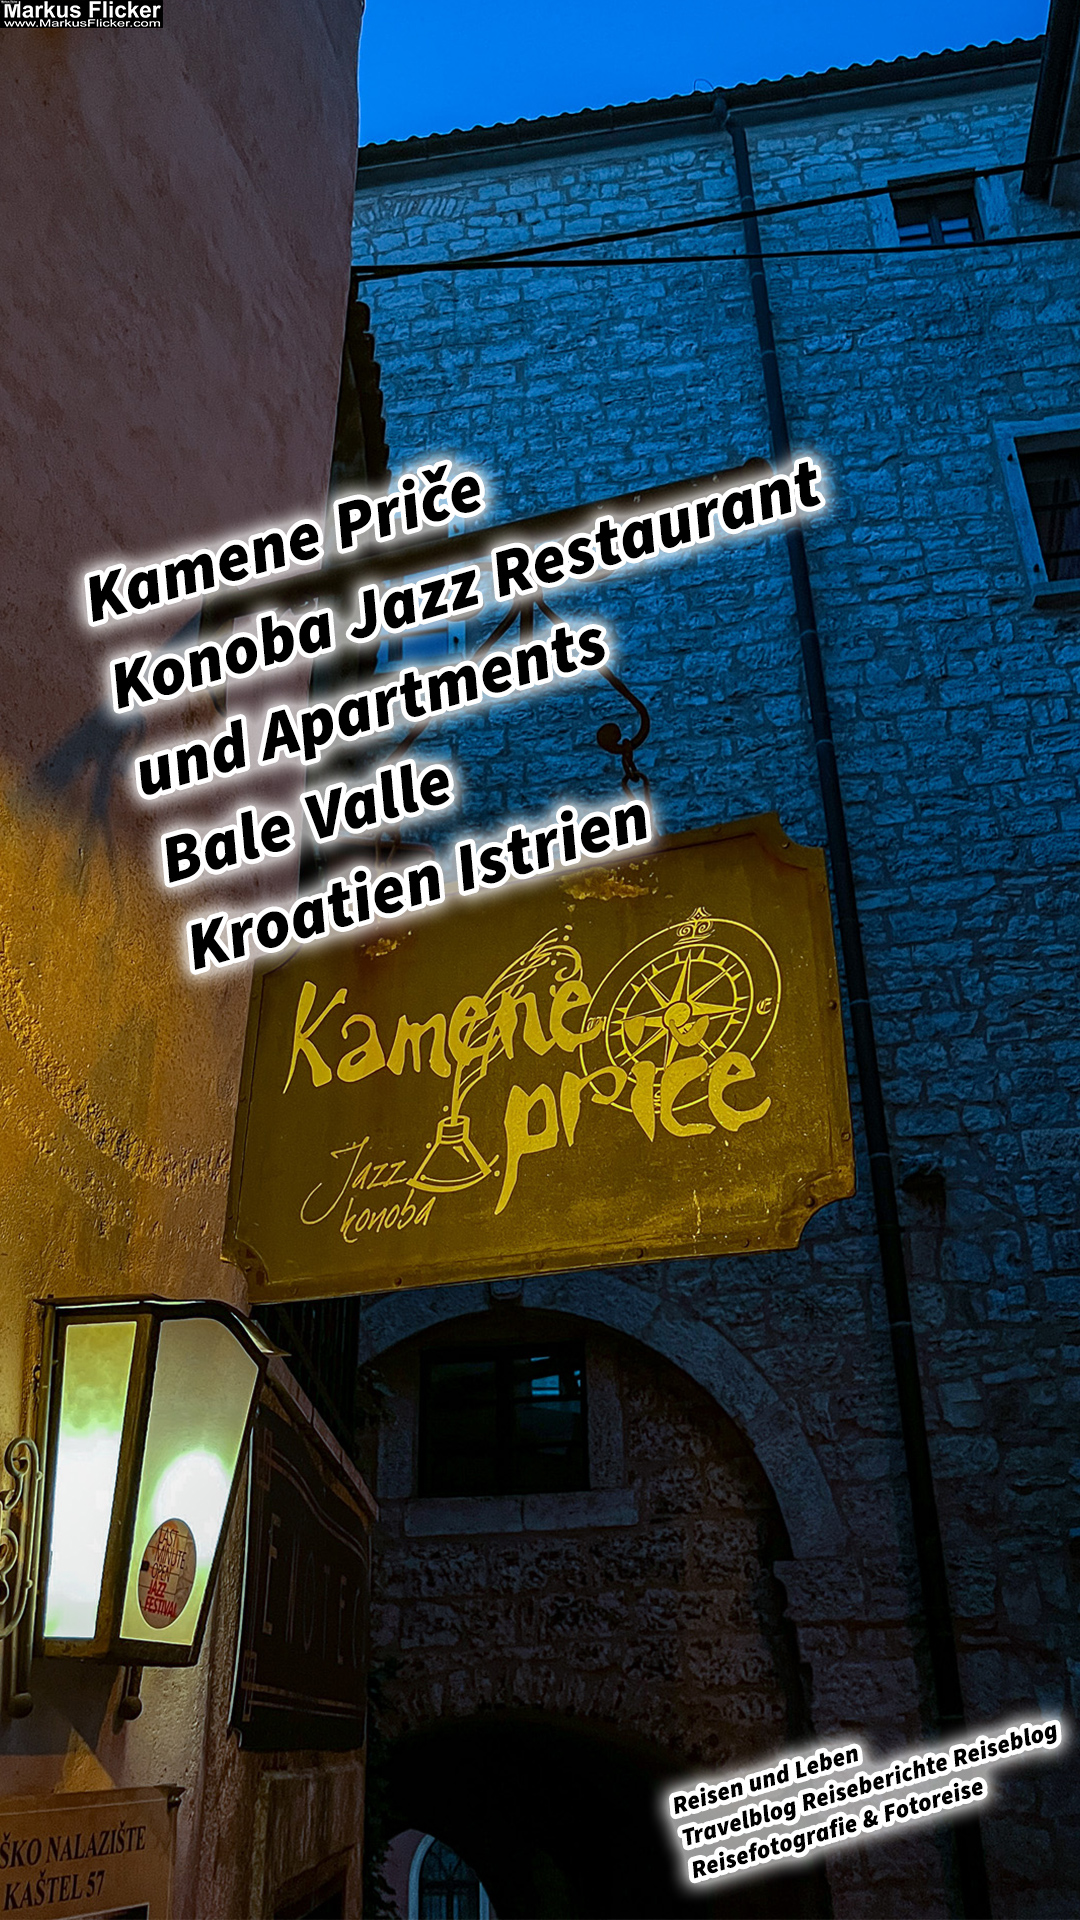 Kamene Priče Konoba Jazz Restaurant und Apartments Bale Valle Kroatien Istrien #visitcroatia